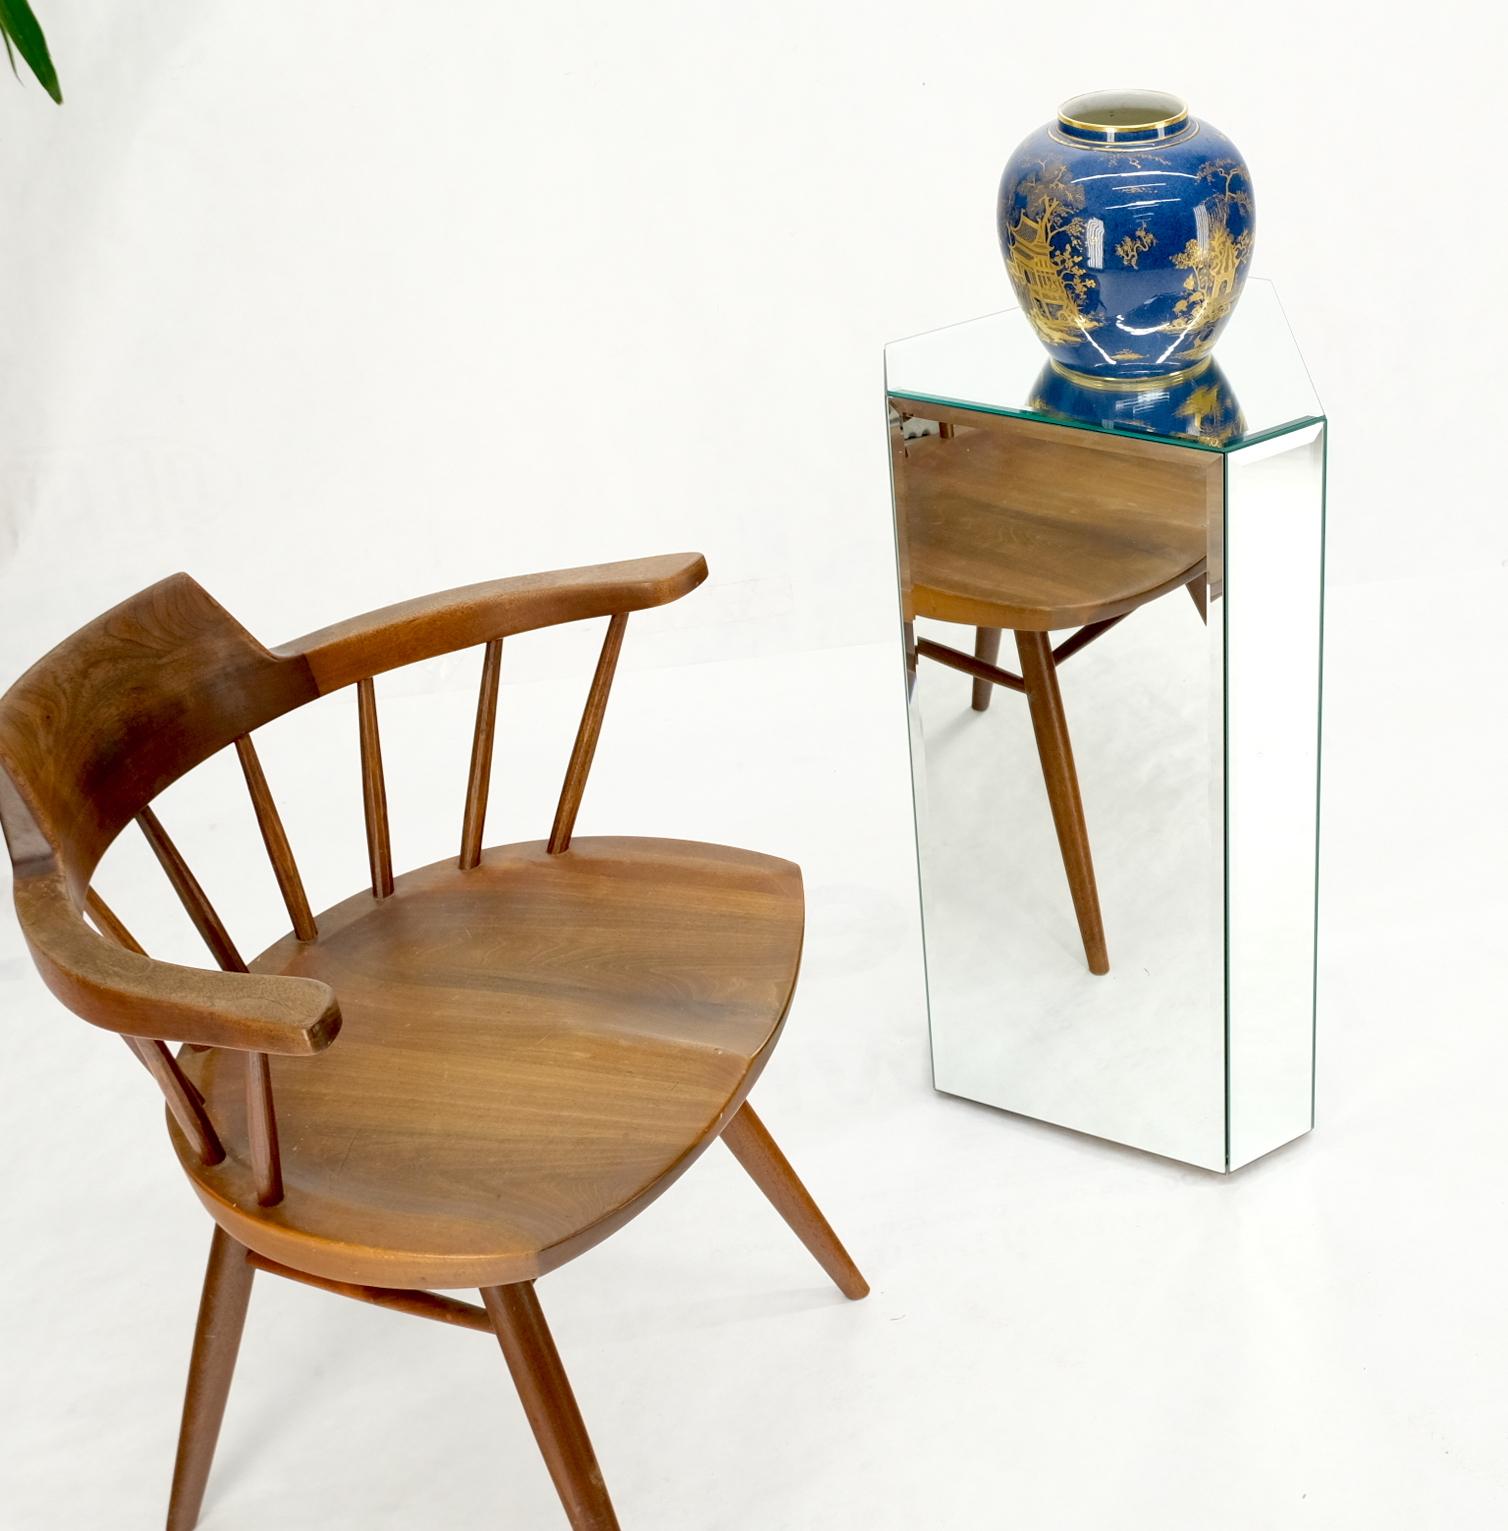 mirror pedestal table